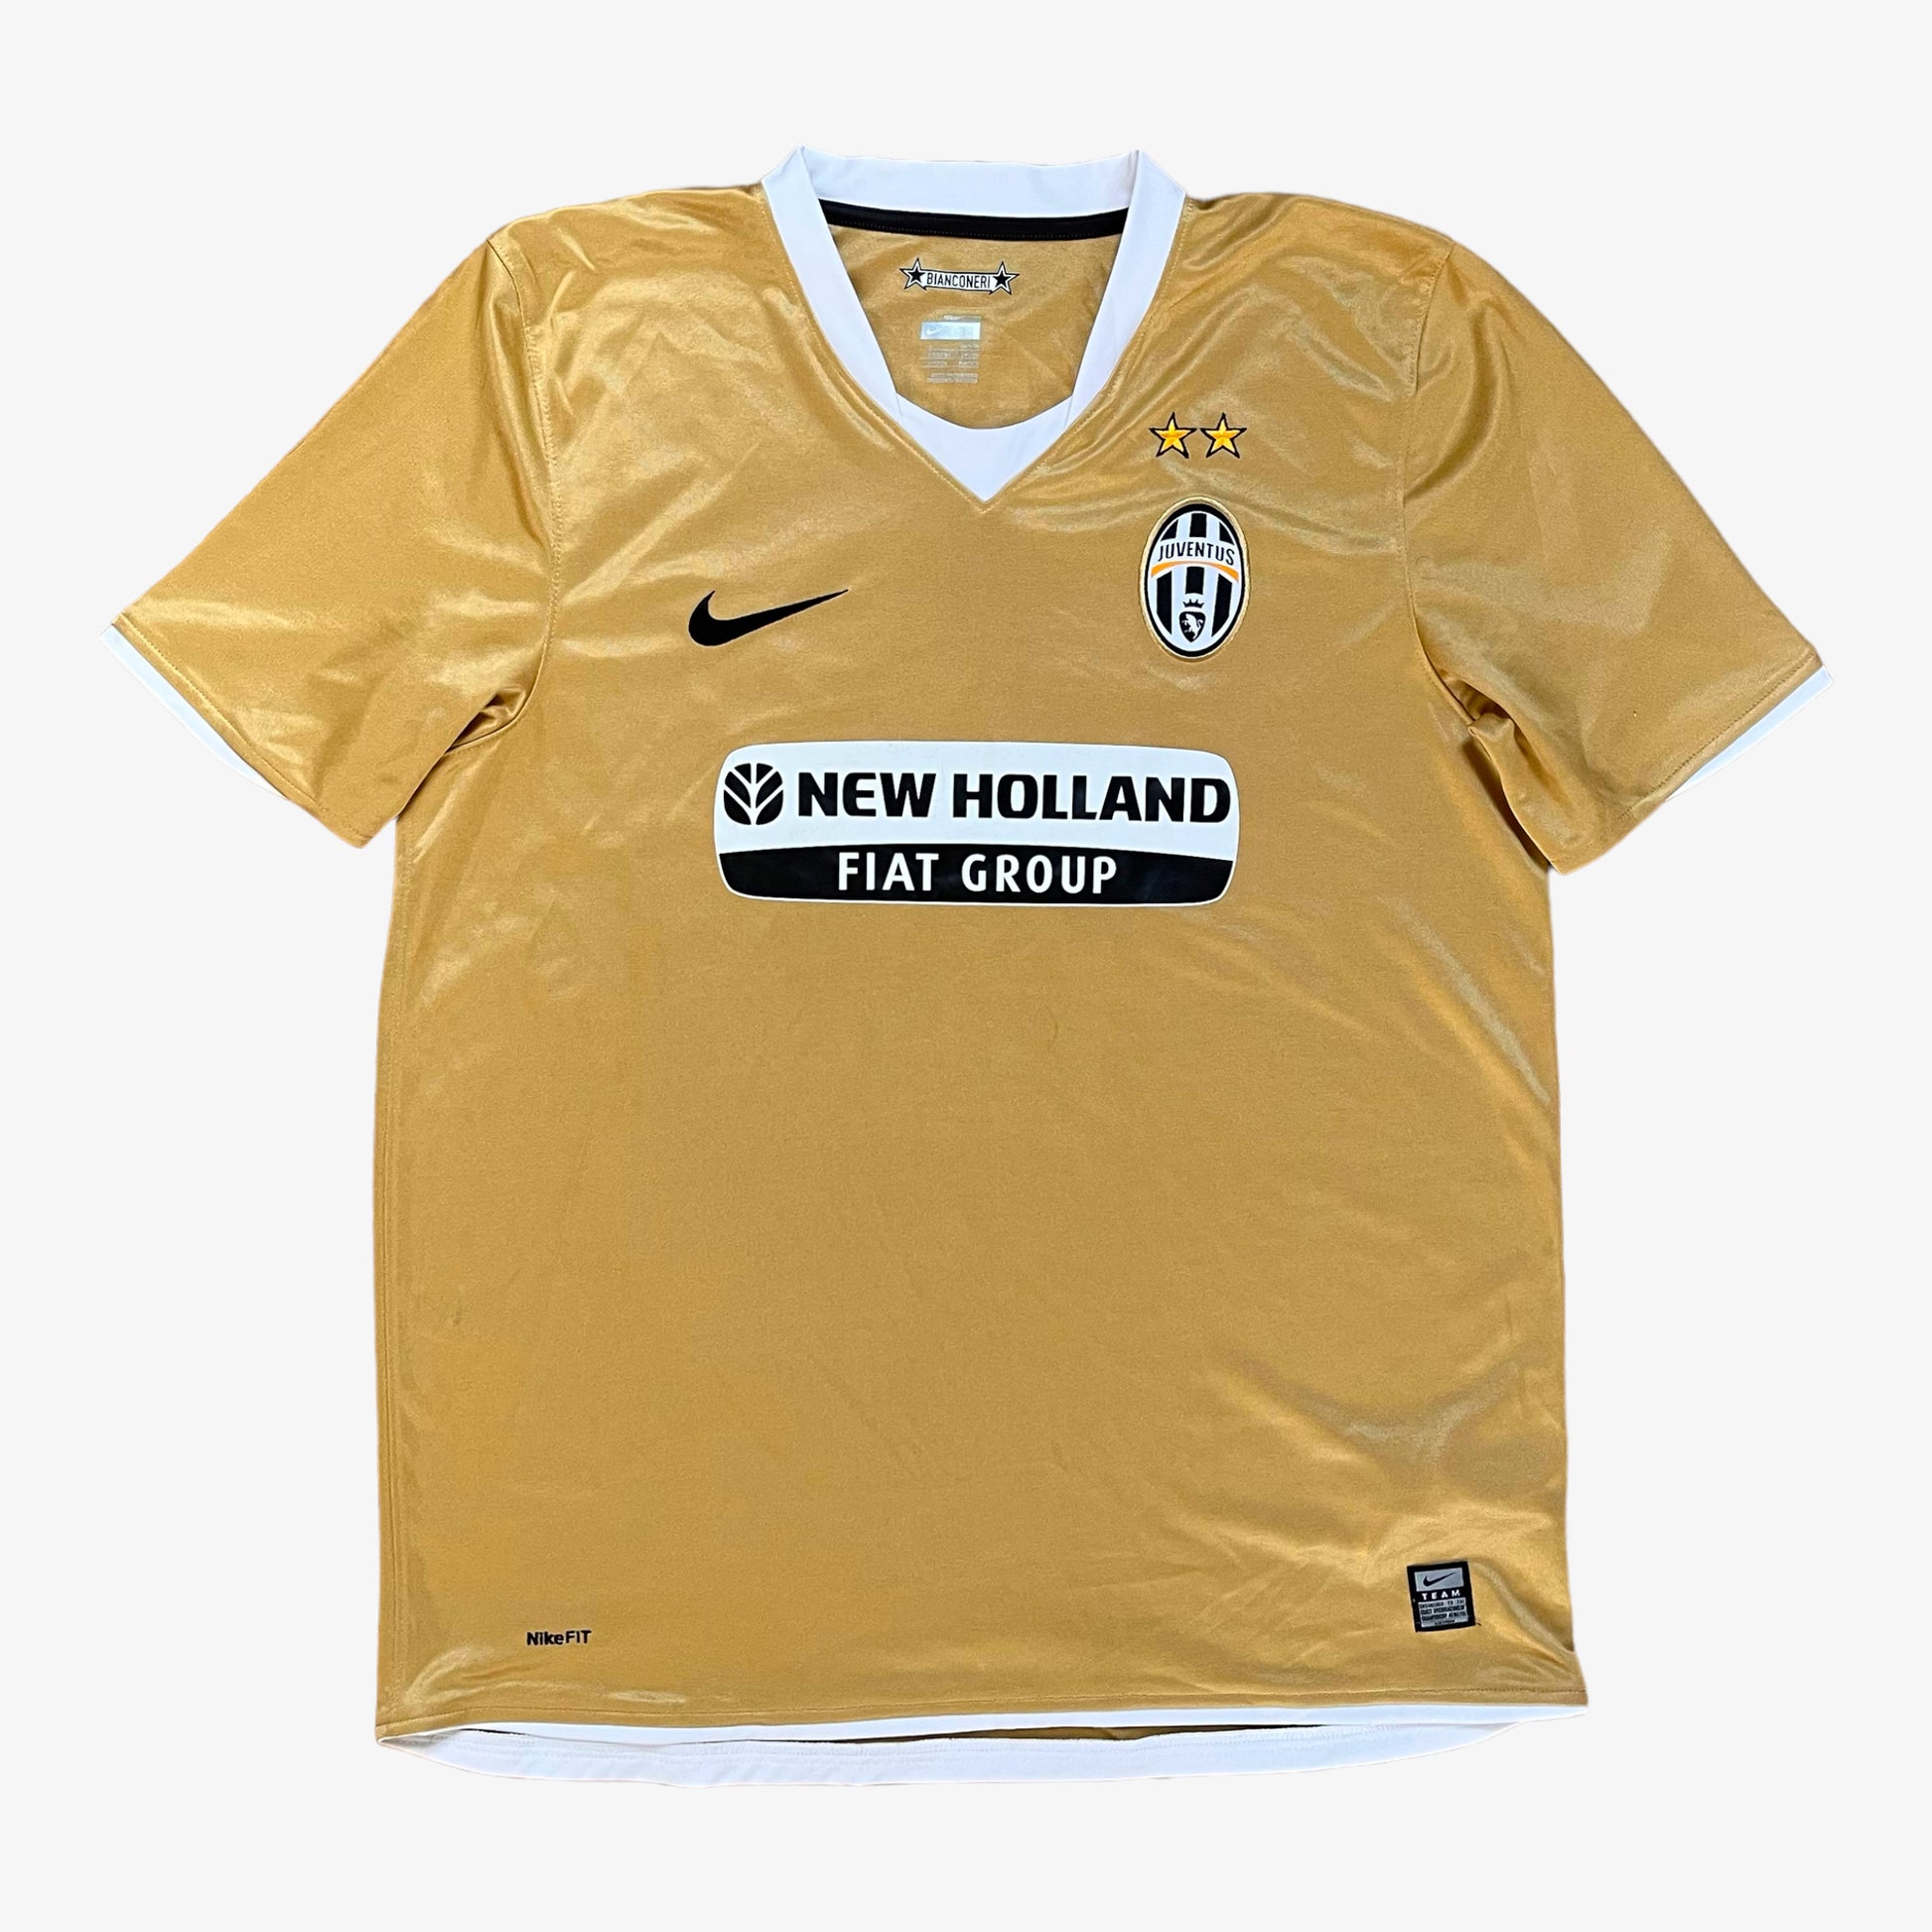 Juventus cappellino 2008-09 Nike